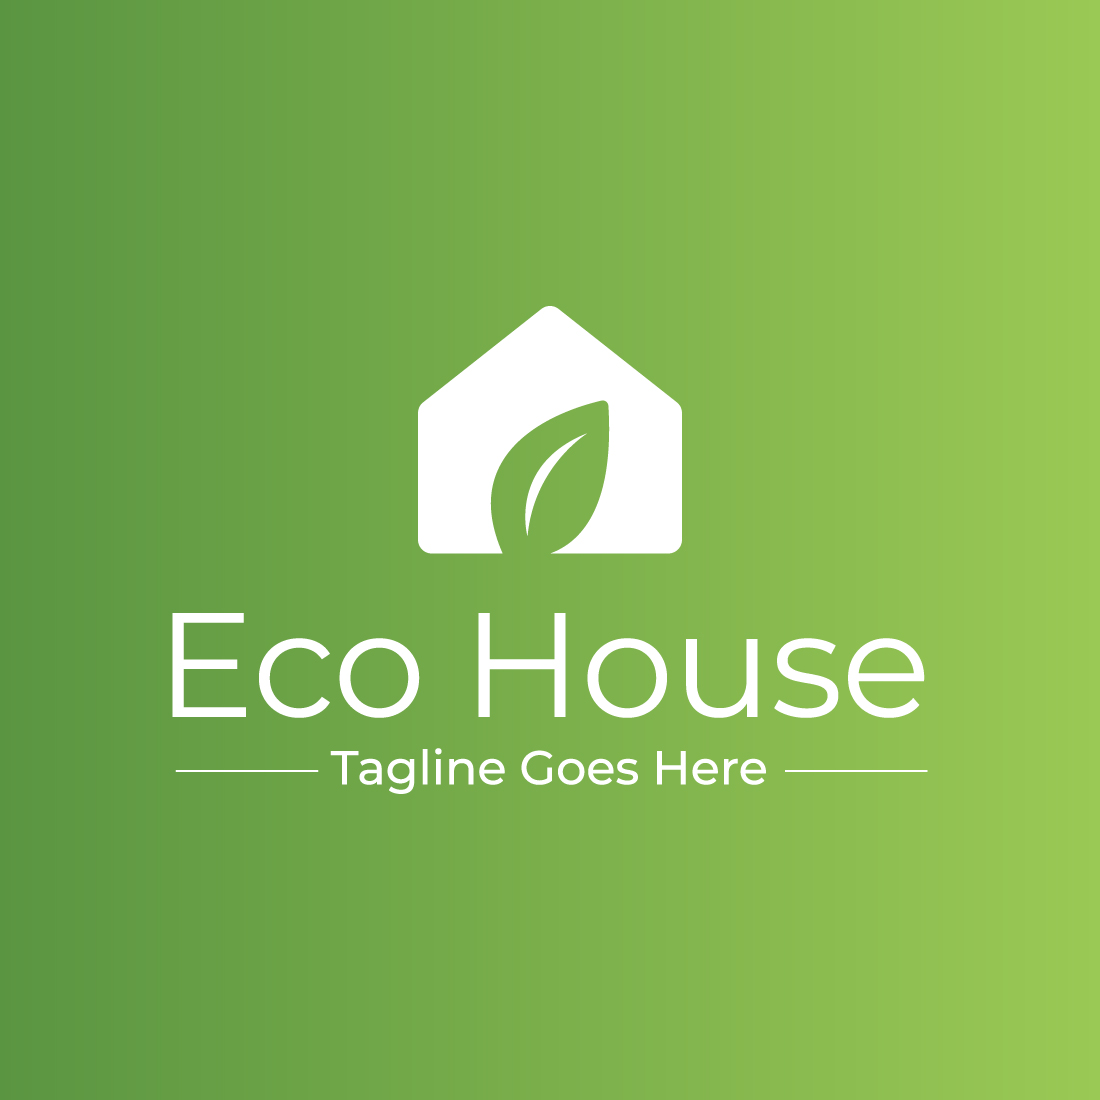 Eco House Logo Design Template preview image.